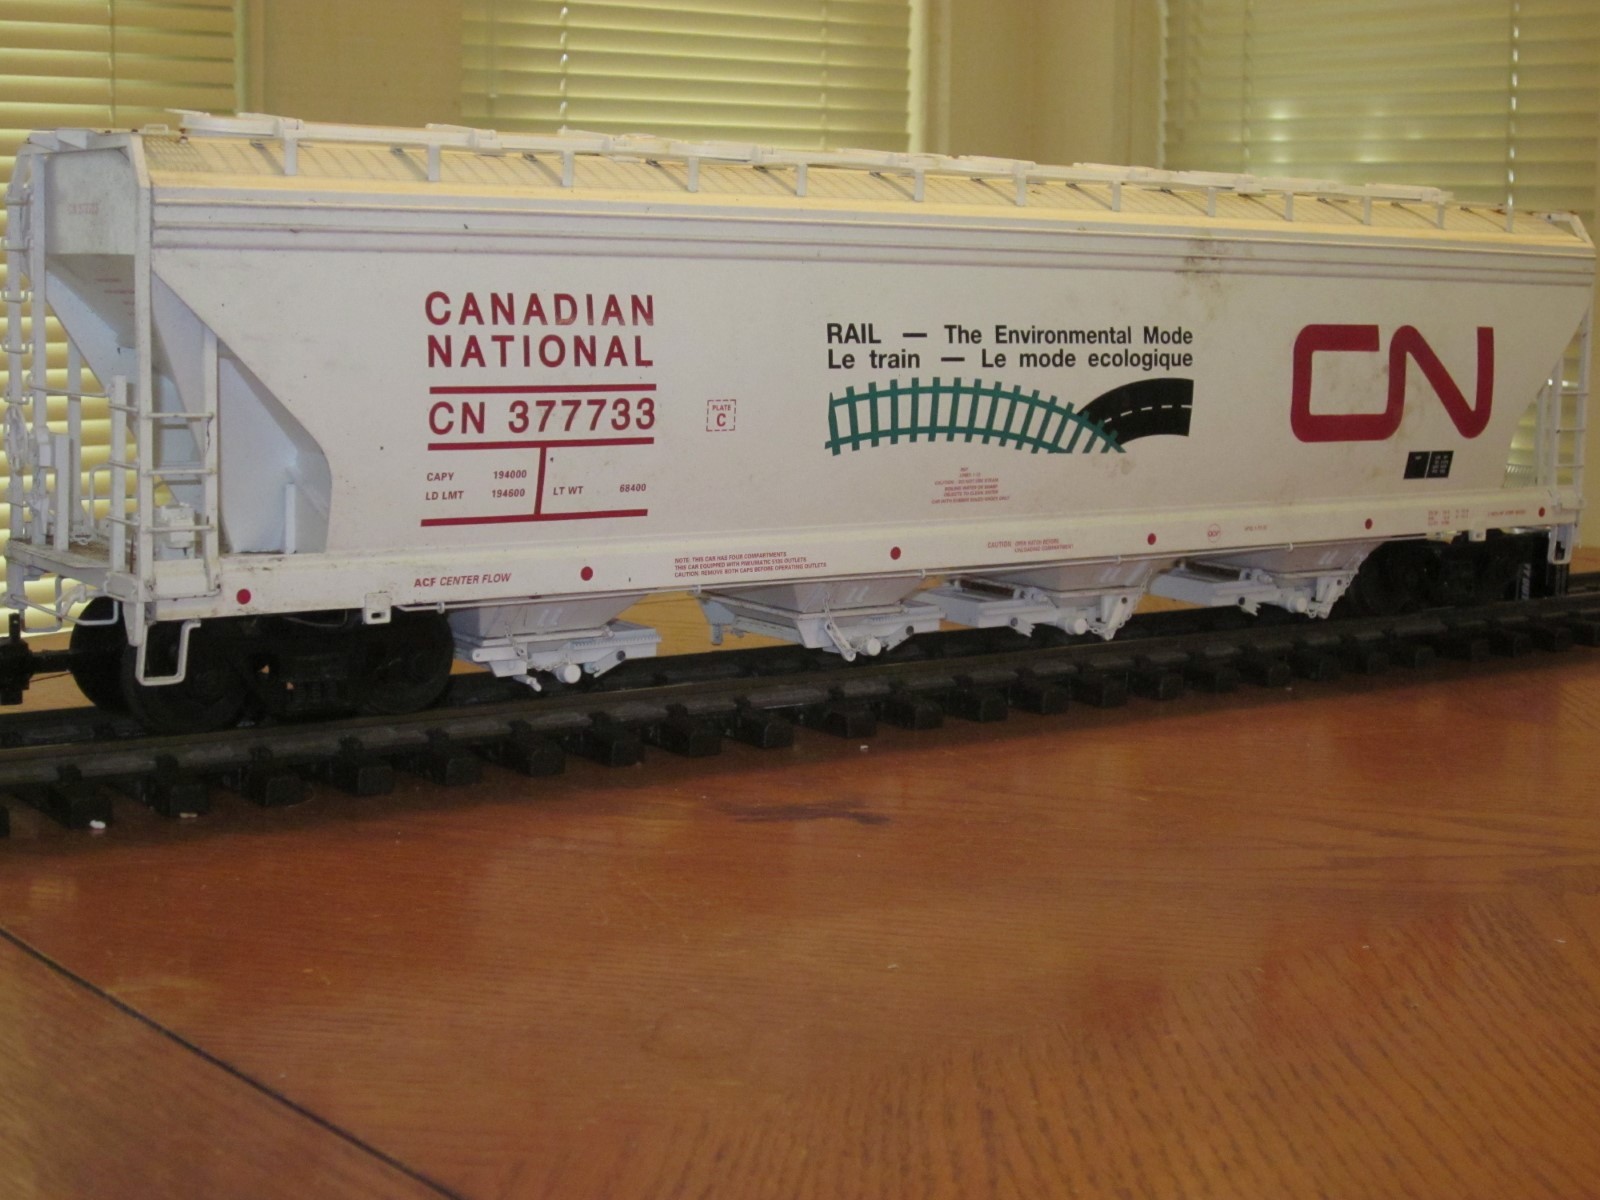 R14135 CanadianNational CN 377733